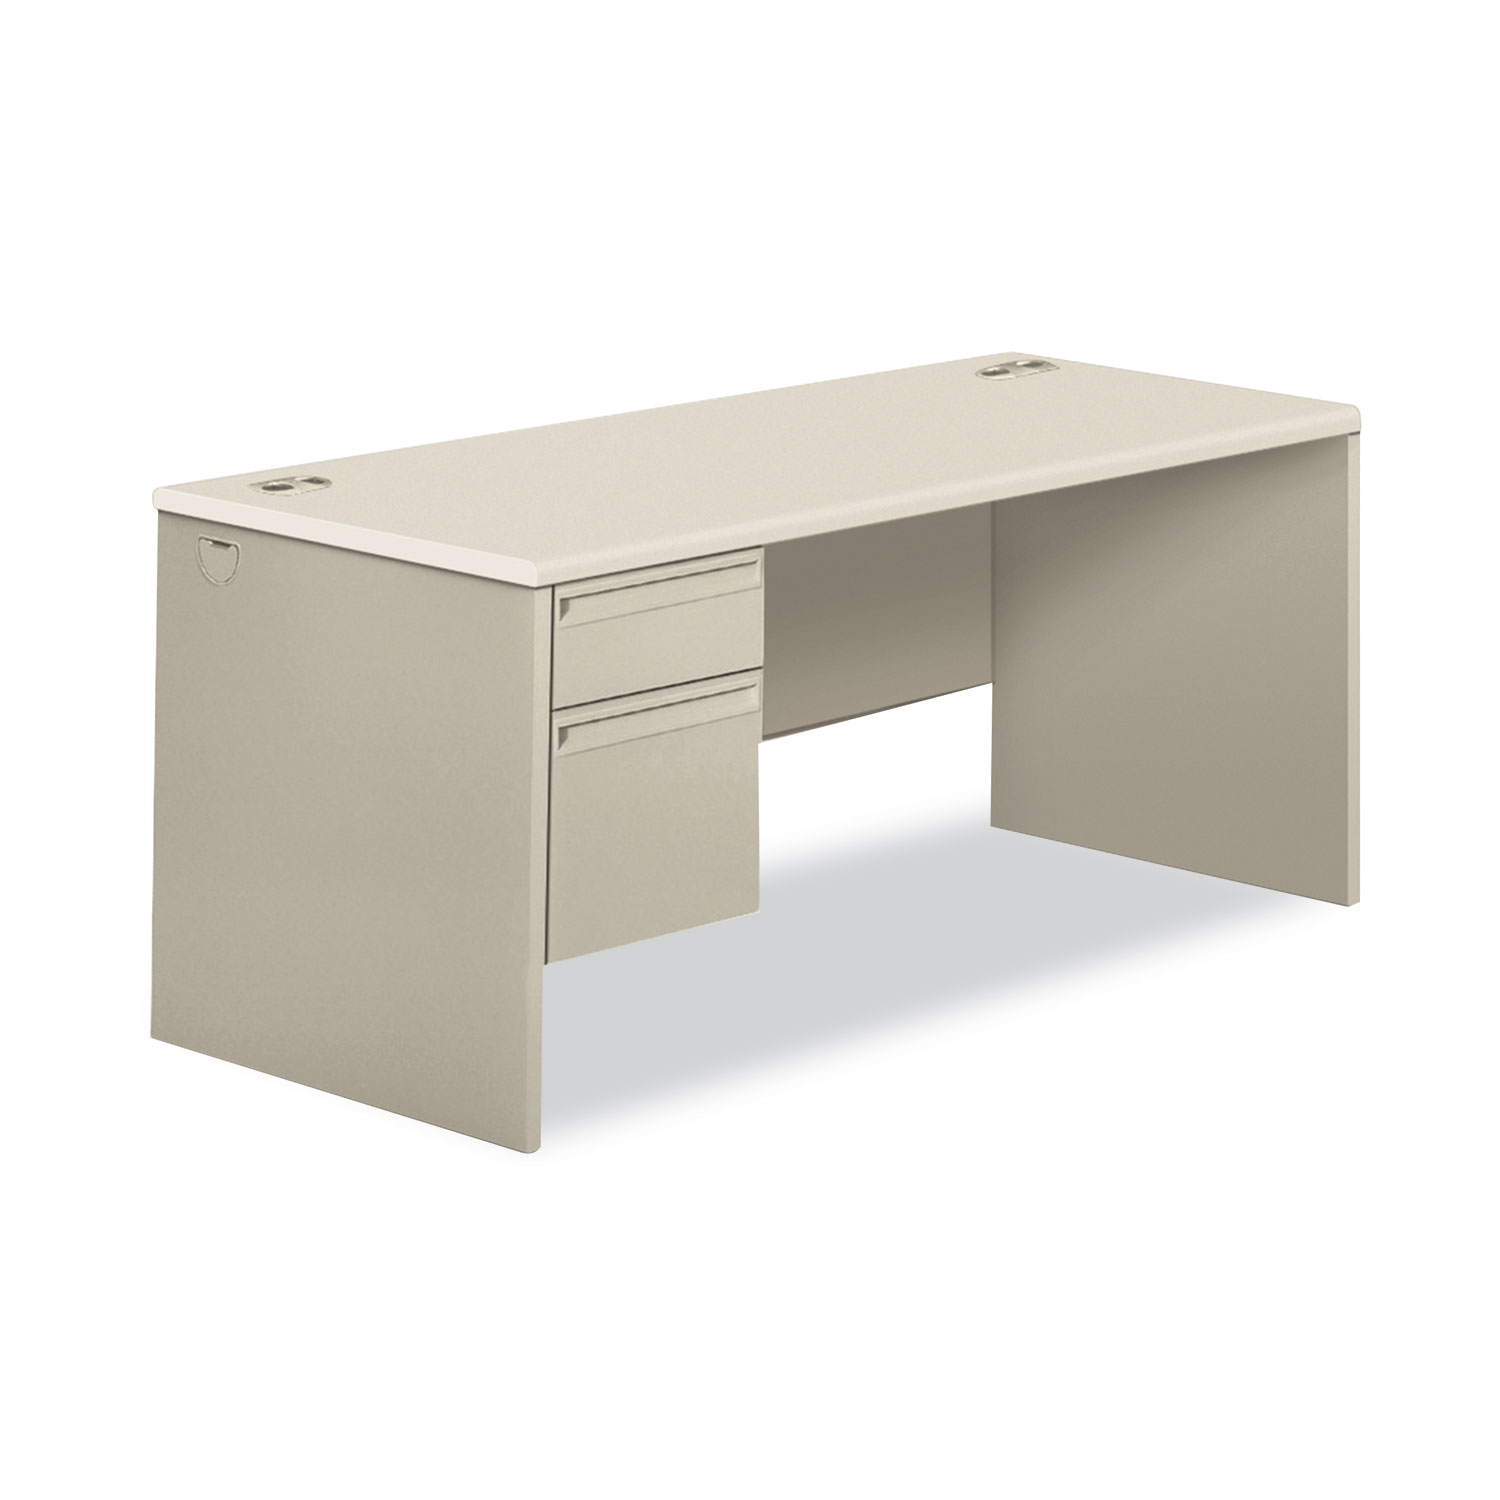  HON H38292L.B9.Q 38000 Series Single Pedestal Desk, Left, 66w x 30d x 30h, Silver Mesh/Light Gray (HON38292LB9Q) 